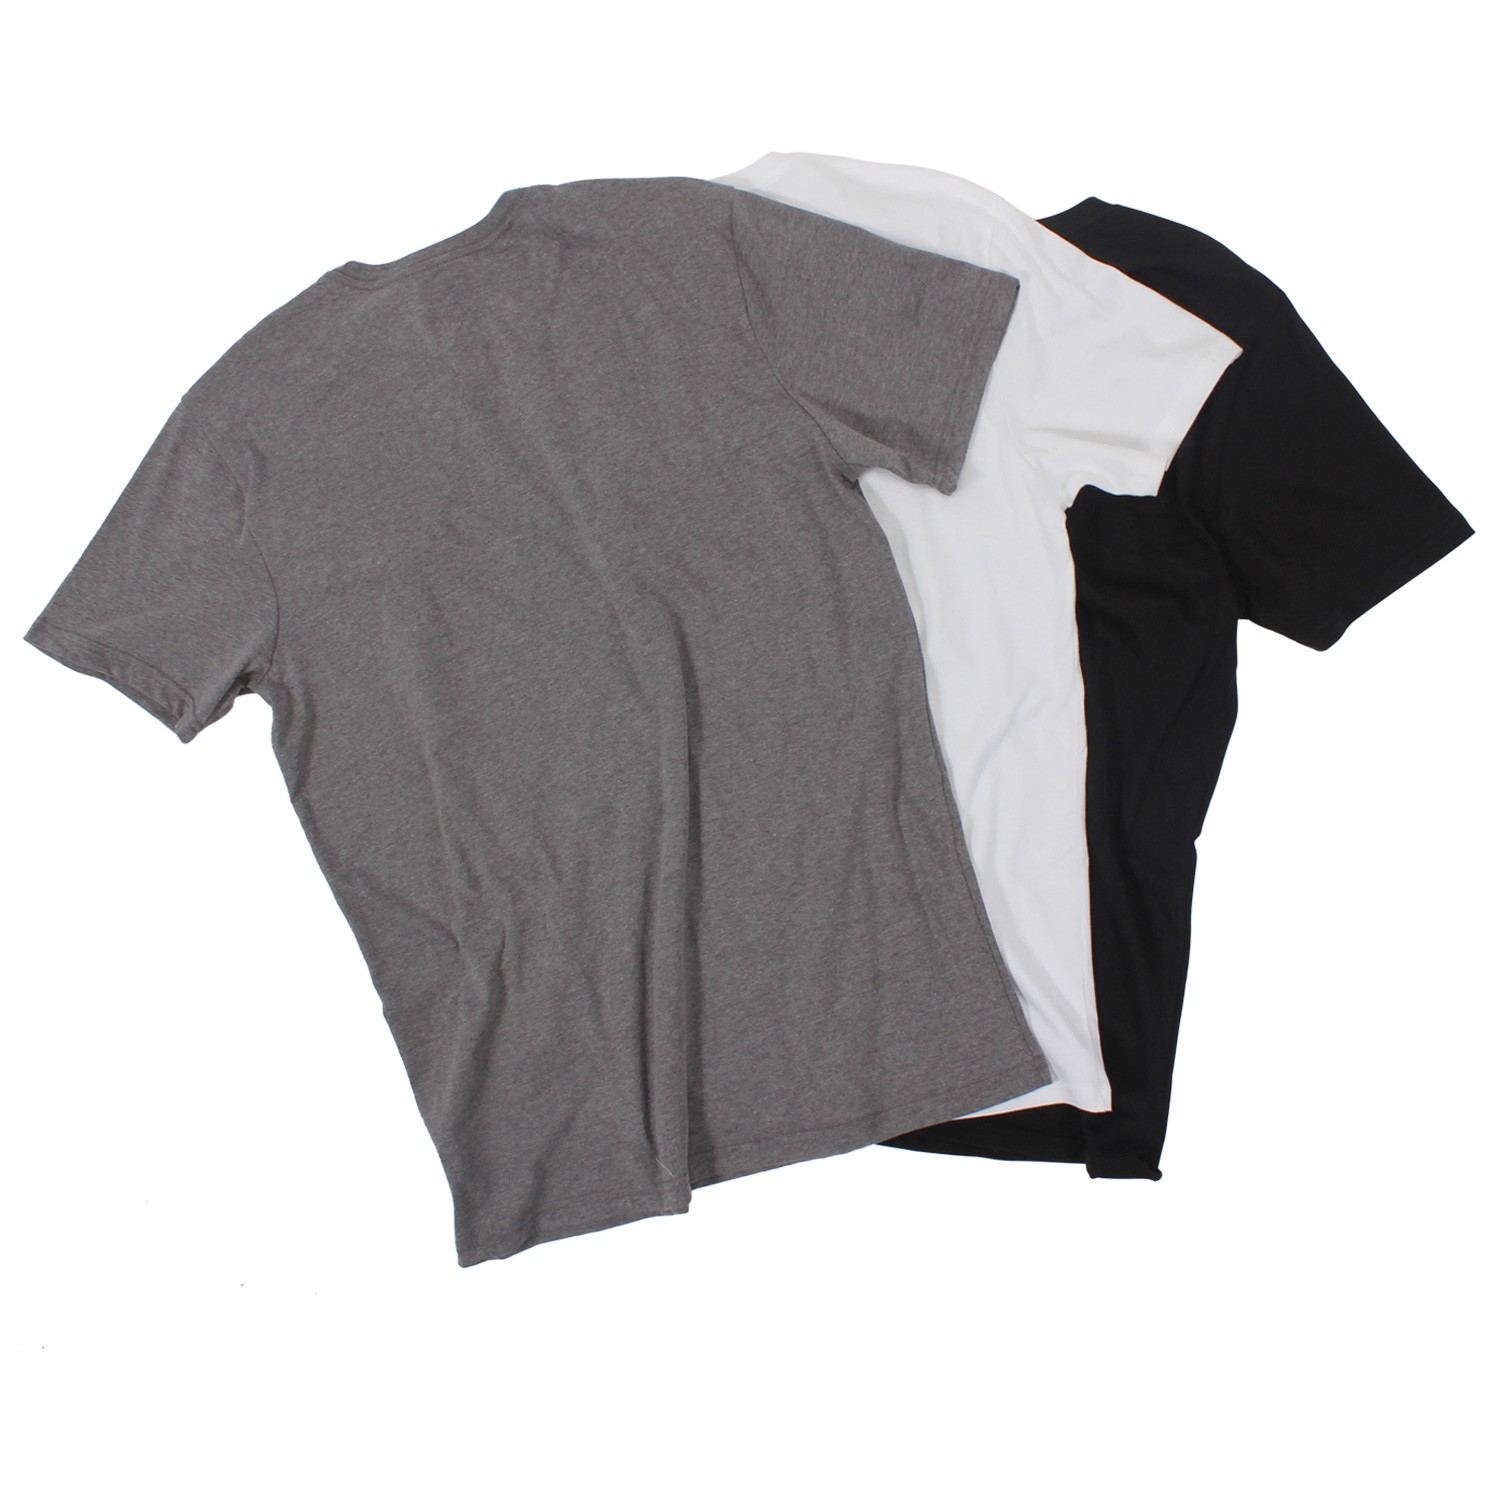 Blank T Shirt Black - ClipArt Best